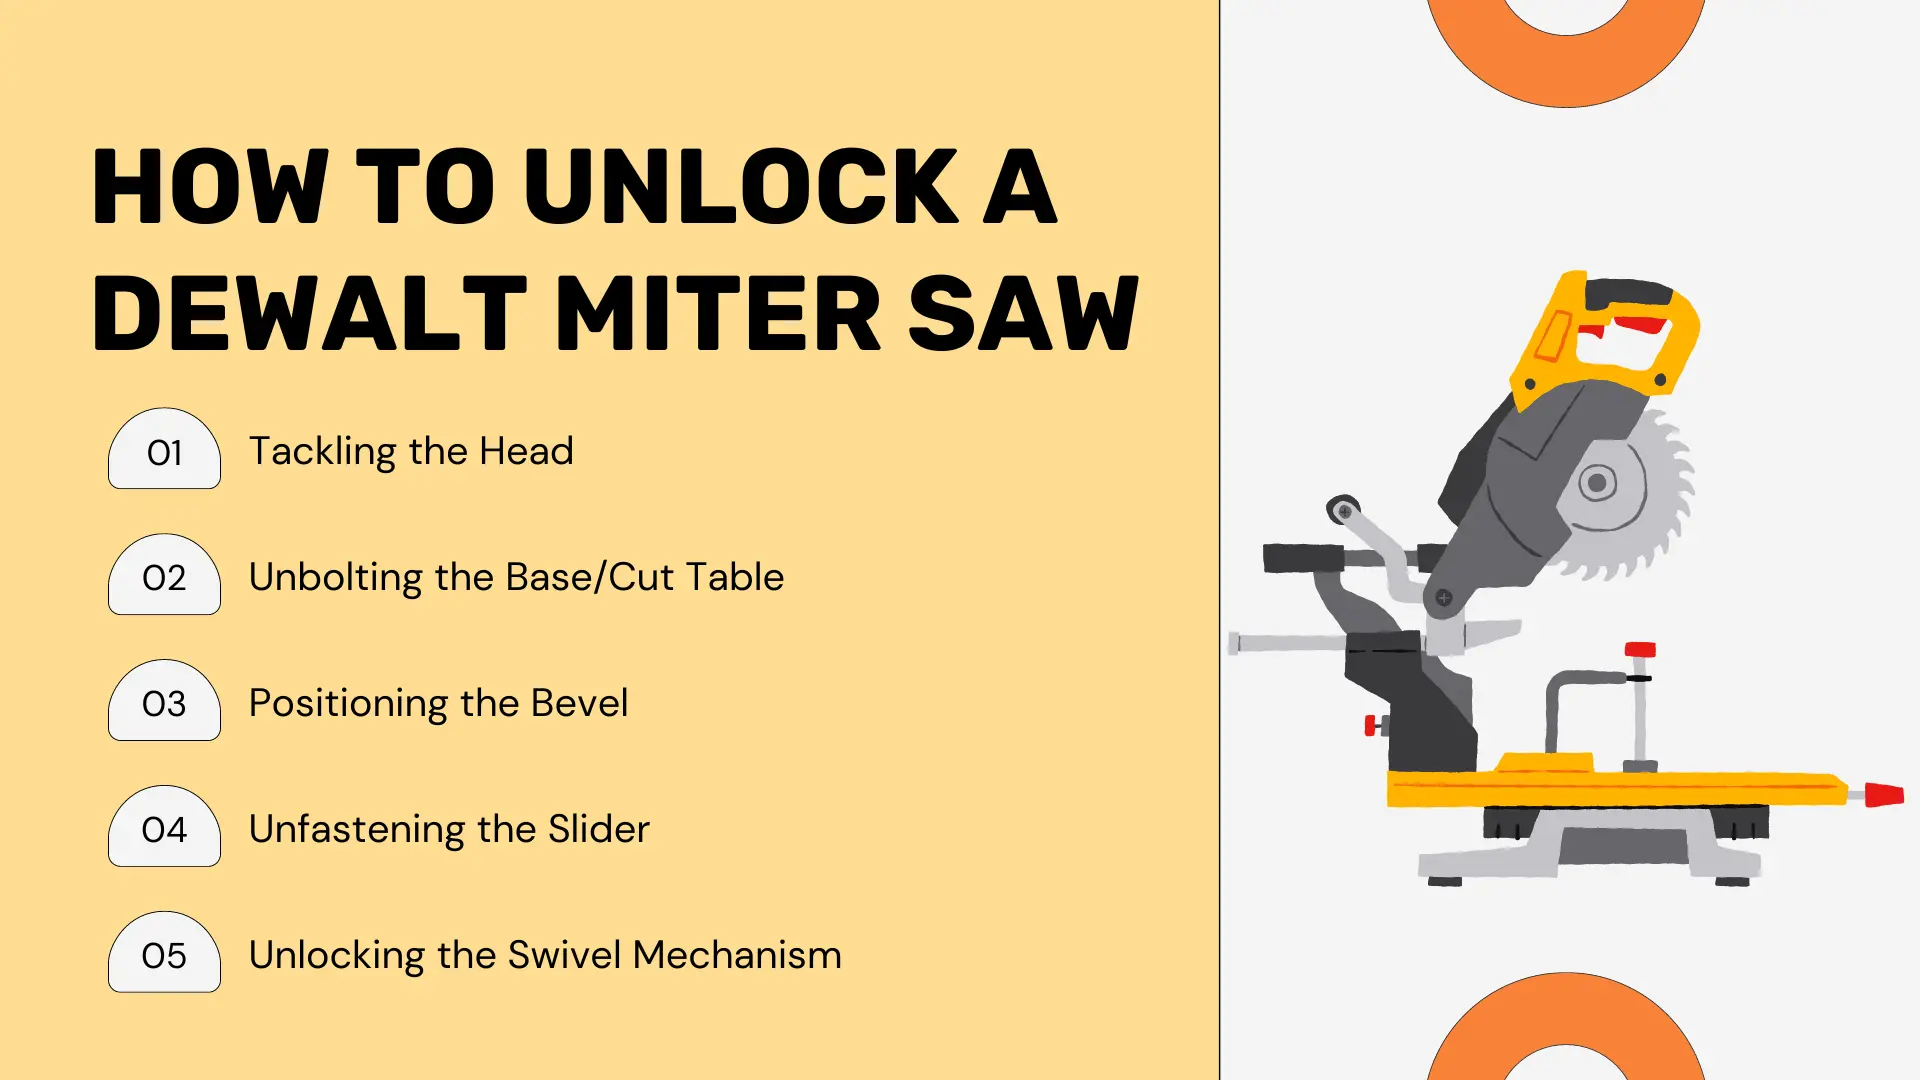 Steps to Unlock a DEWALT Miter Saw